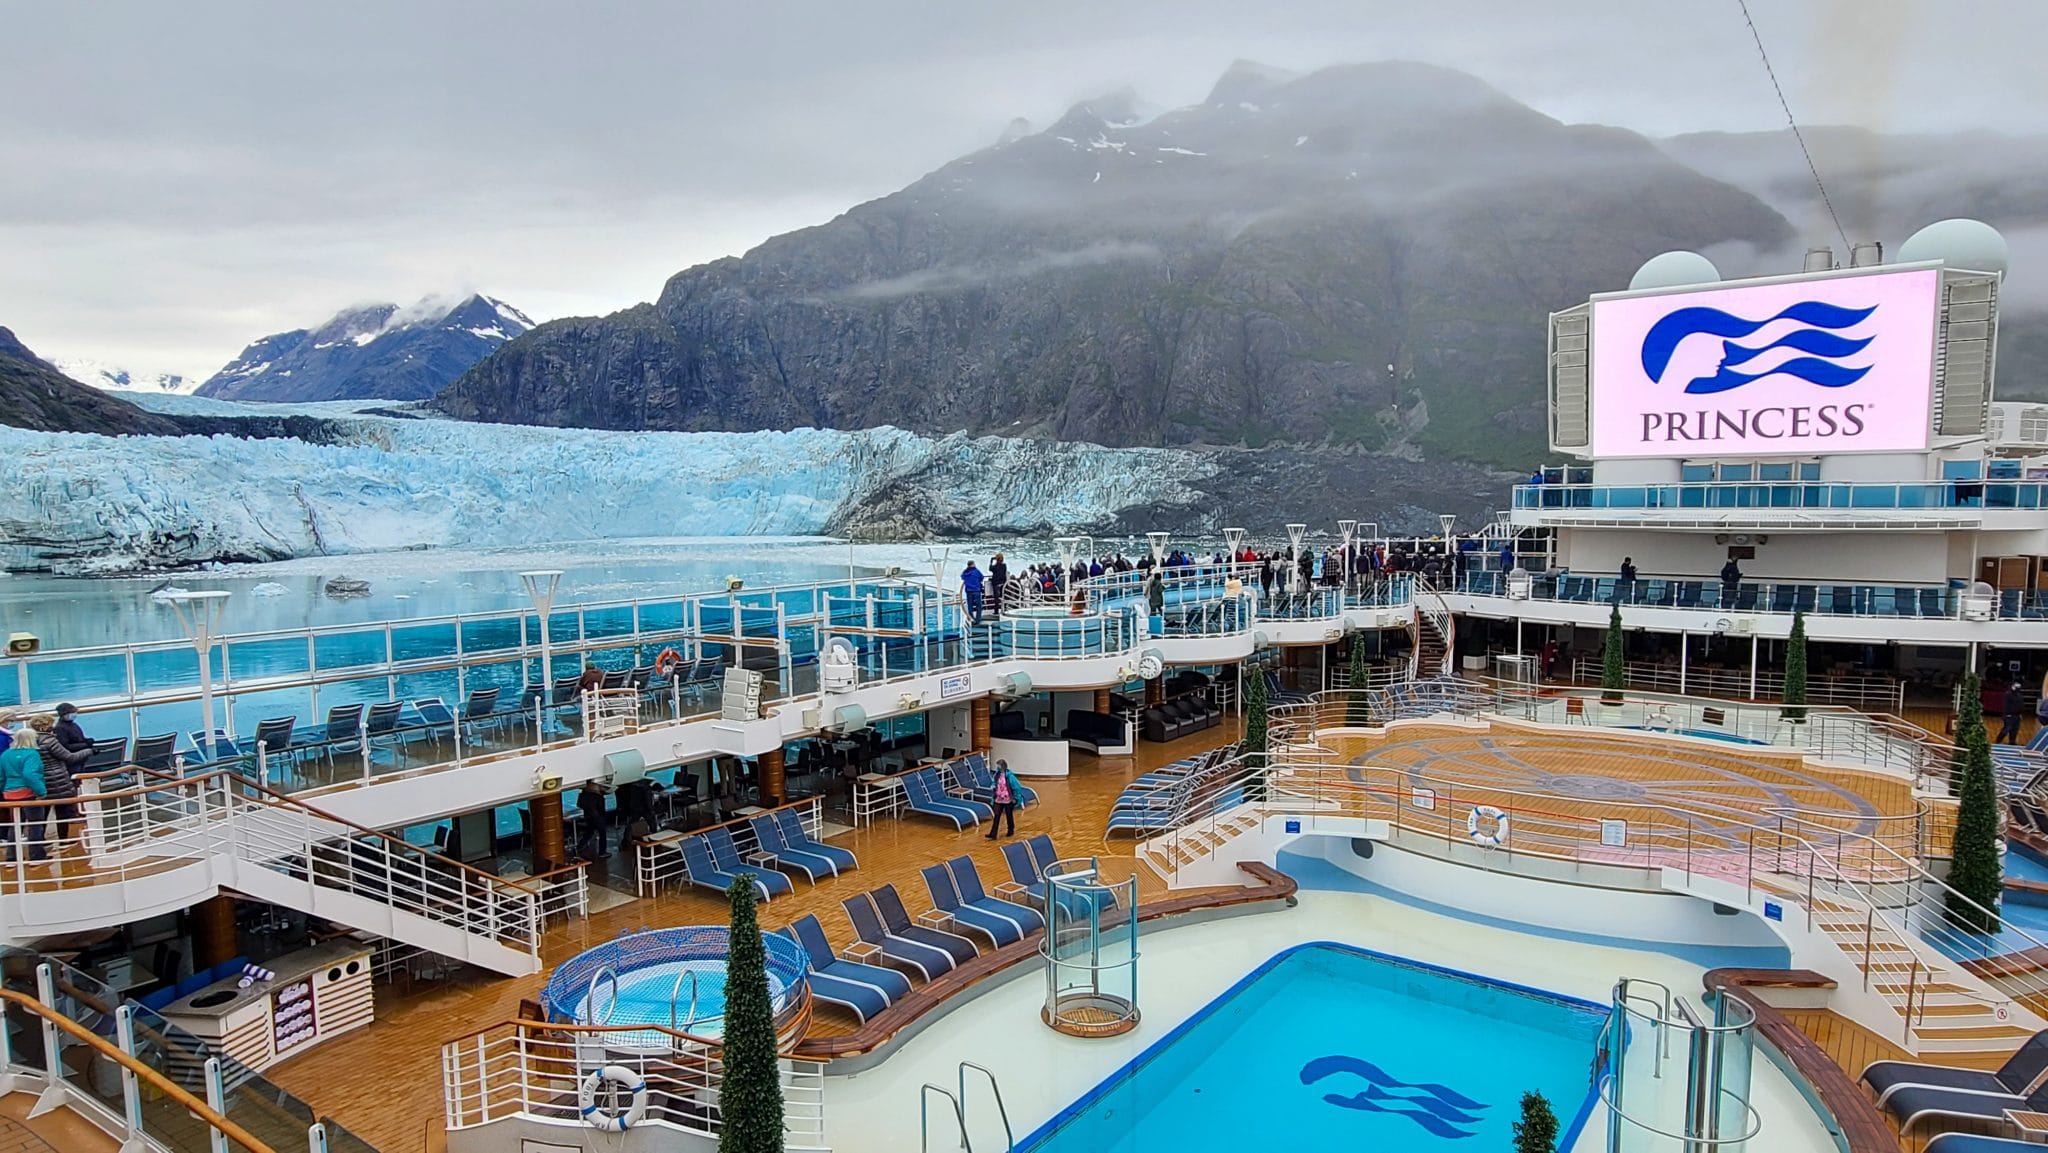 Princess cruise ship in Glacier Bay Alaska